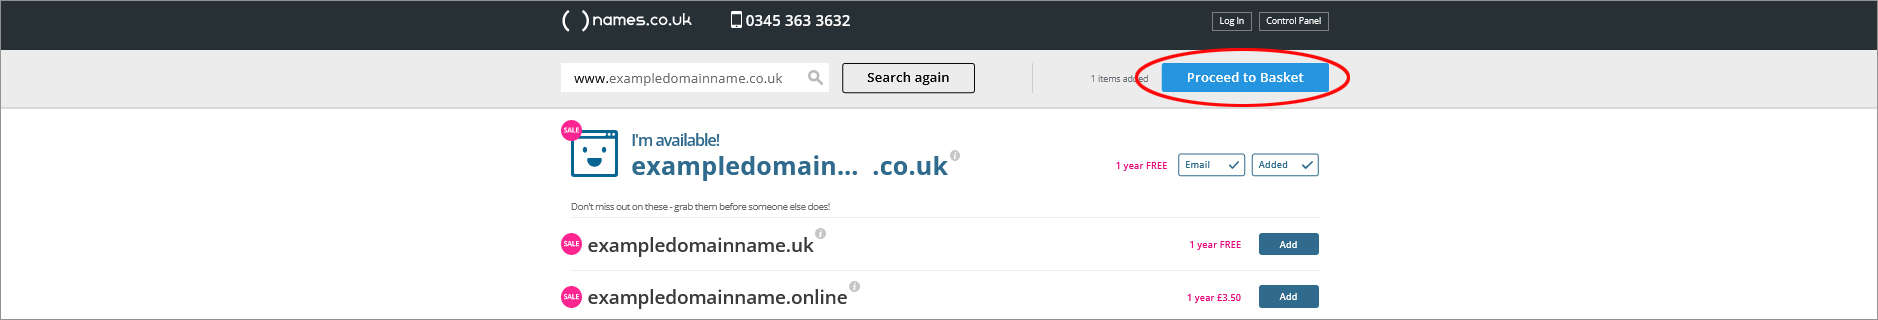 Domain name result page - screenshot